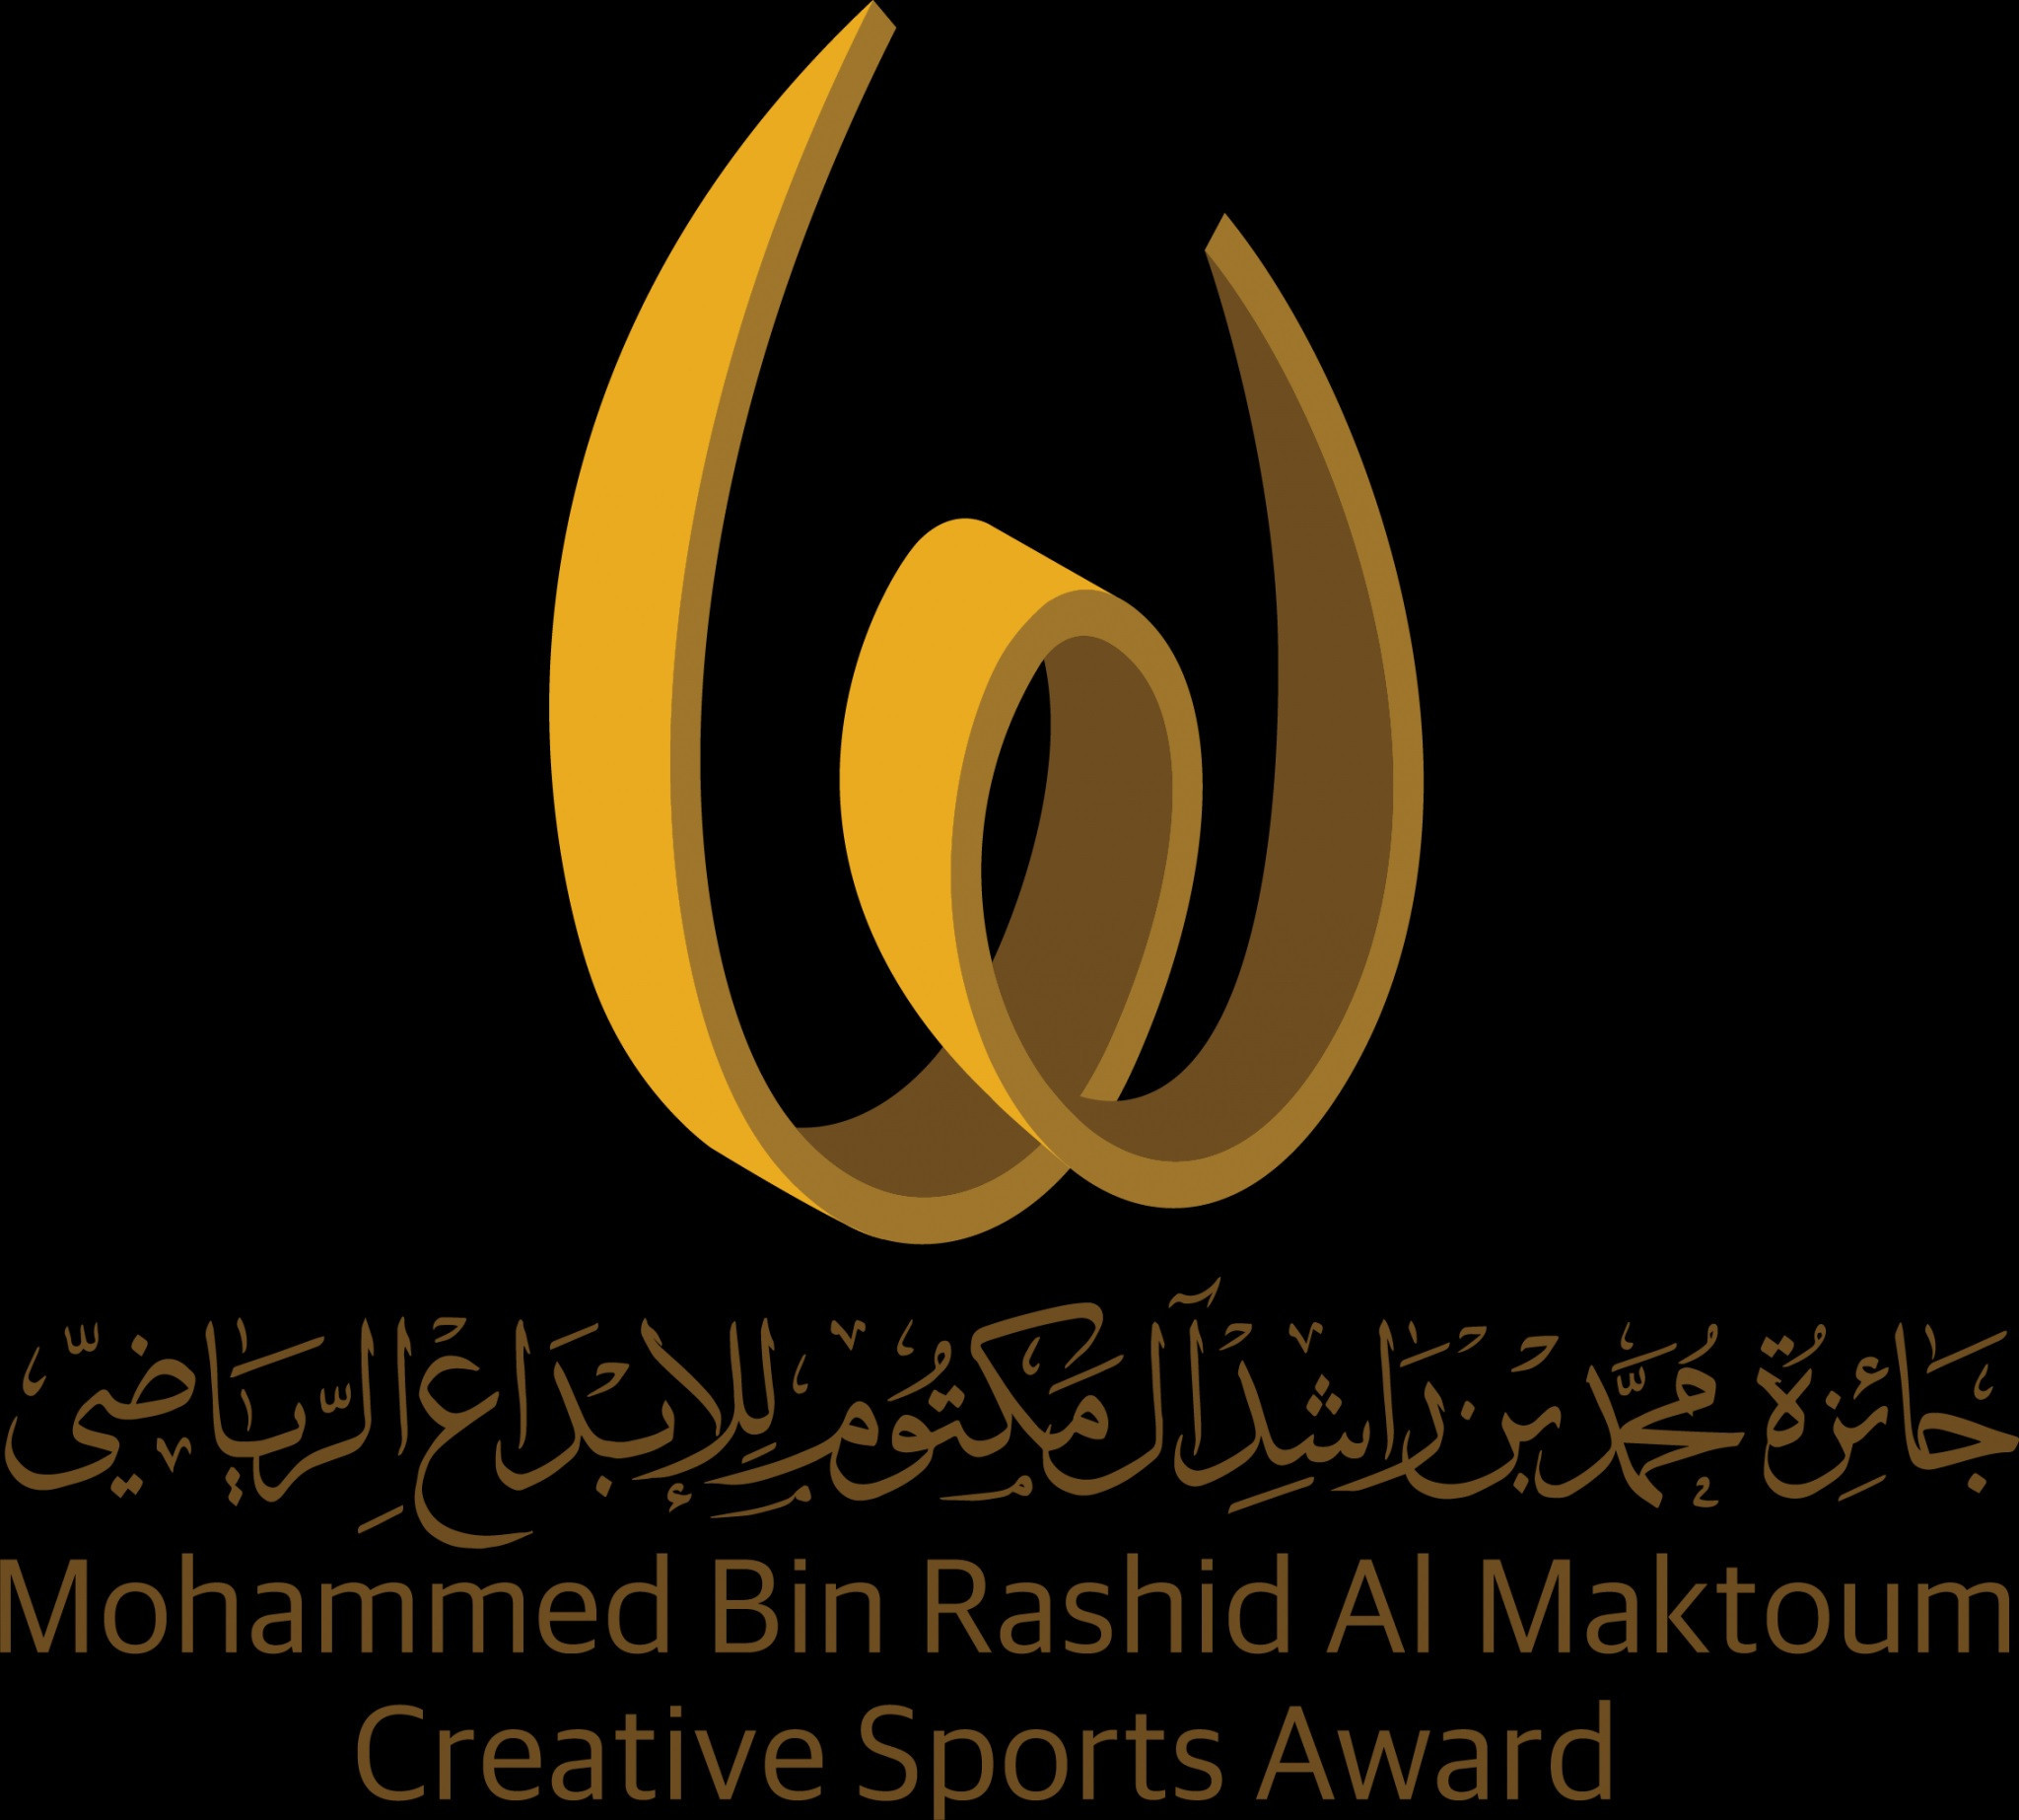 Mohammed Bin Rashid Al Maktoum Creative Sports Award postponed due to coronavirus pandemic